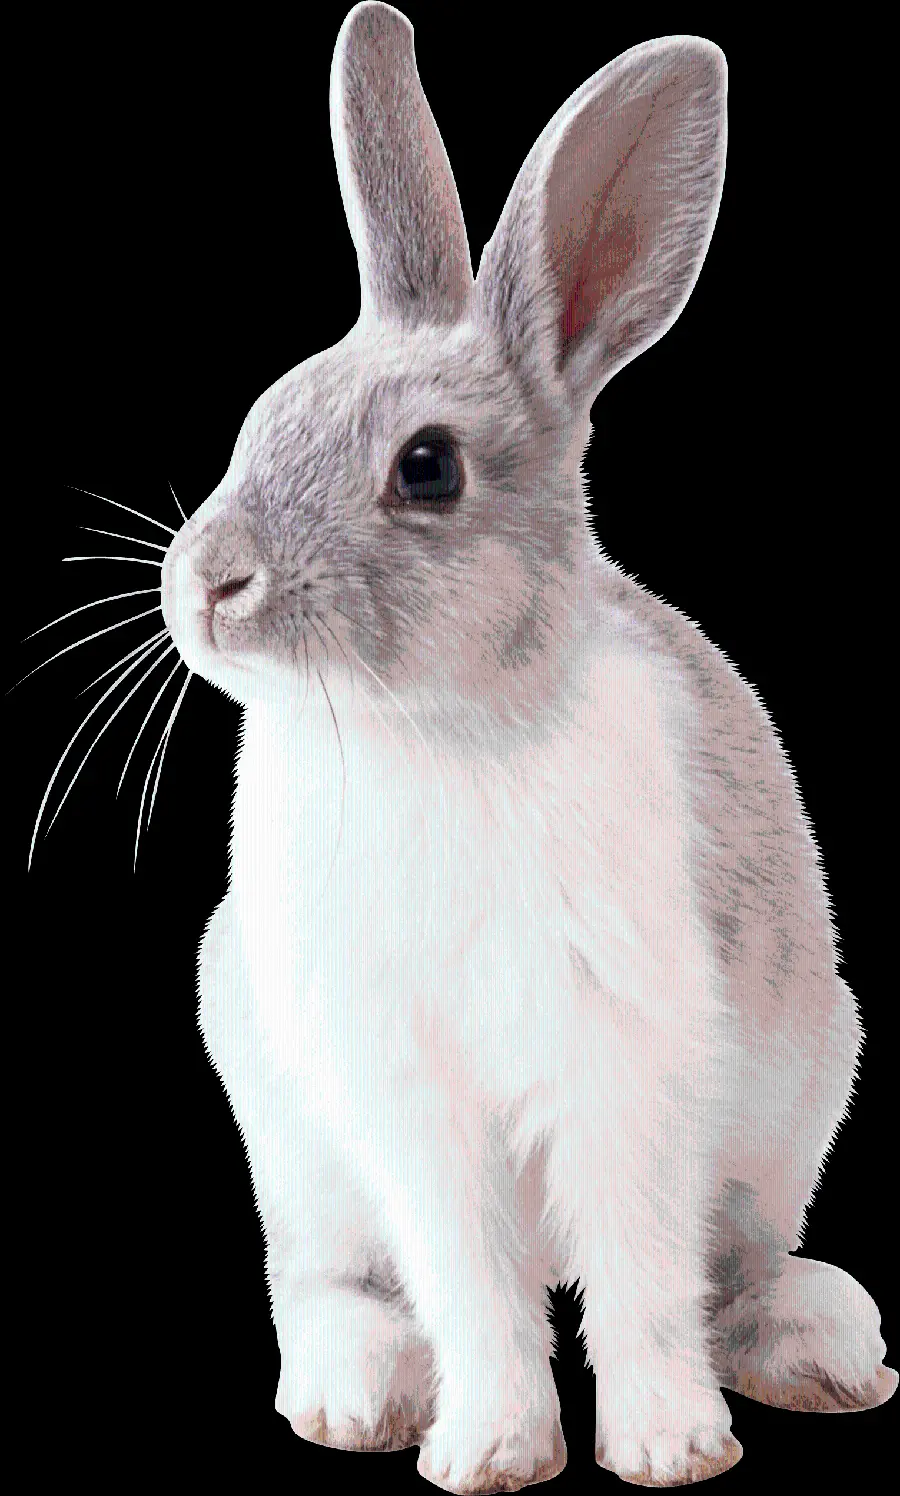 Wallpaper خرگوش واقعی تپل و پشمالو با فرمت PNG